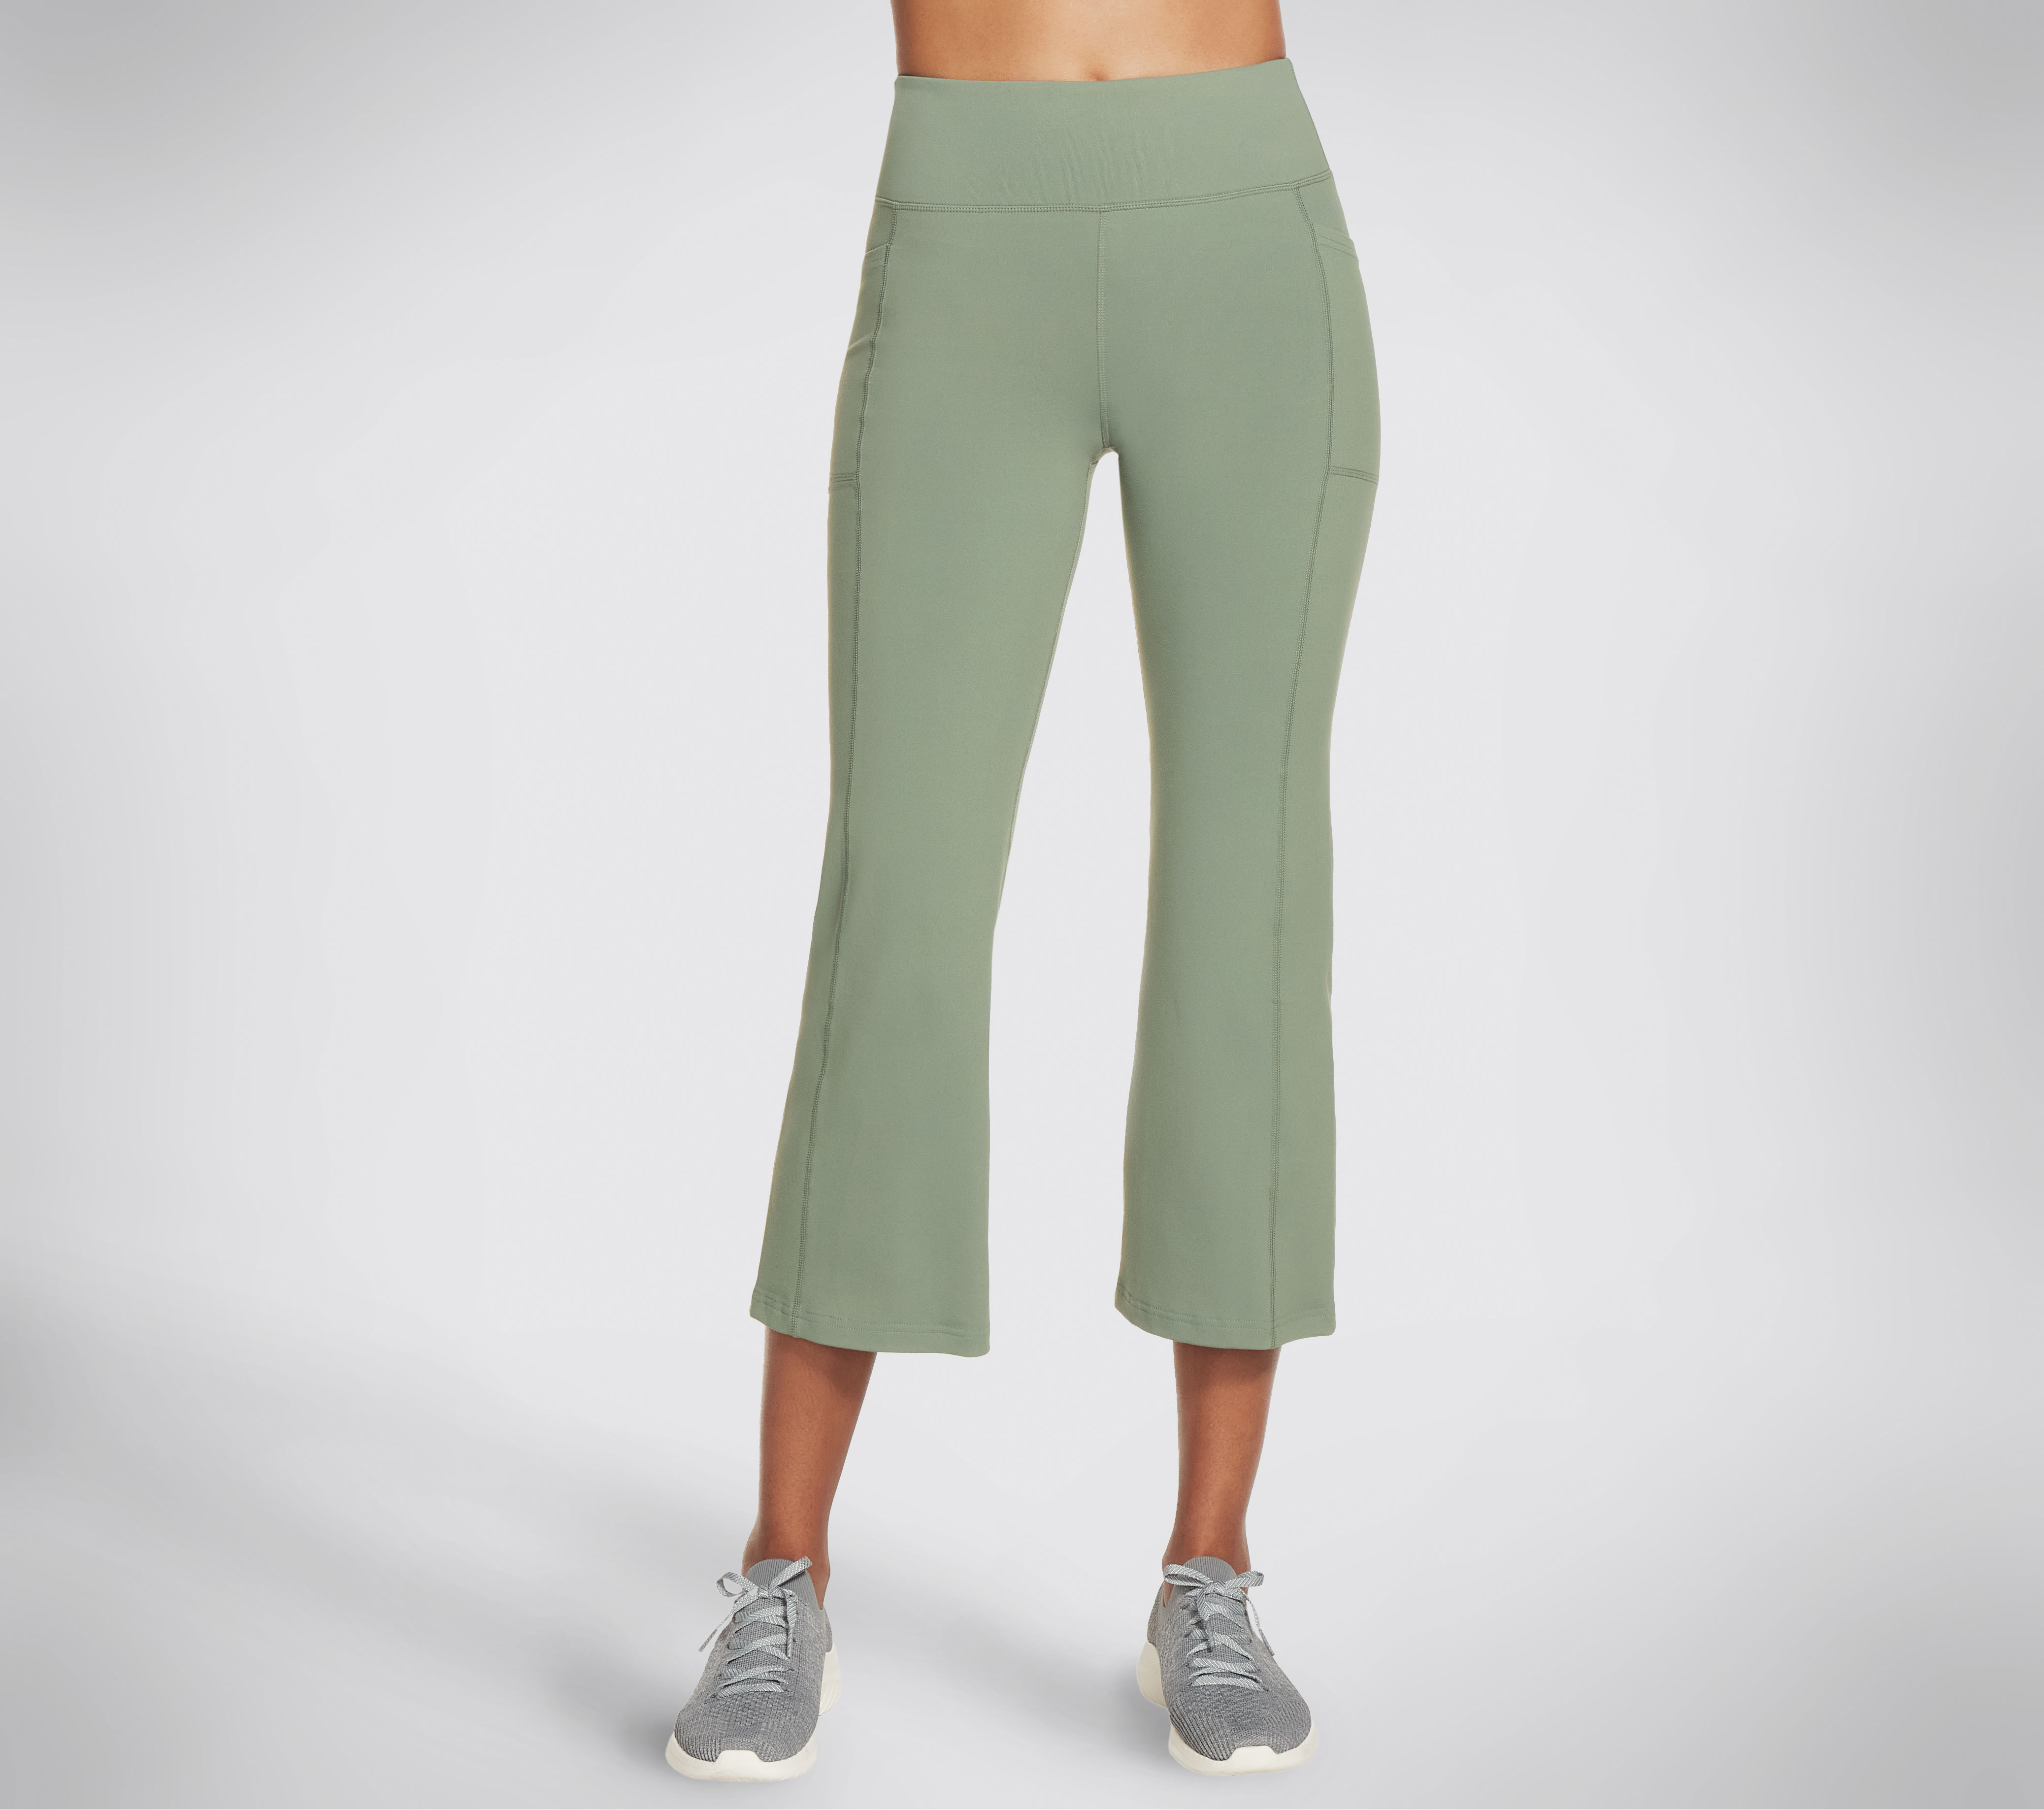 Skechers Women's Go Golf High Side Crop Golf Pants Size 8